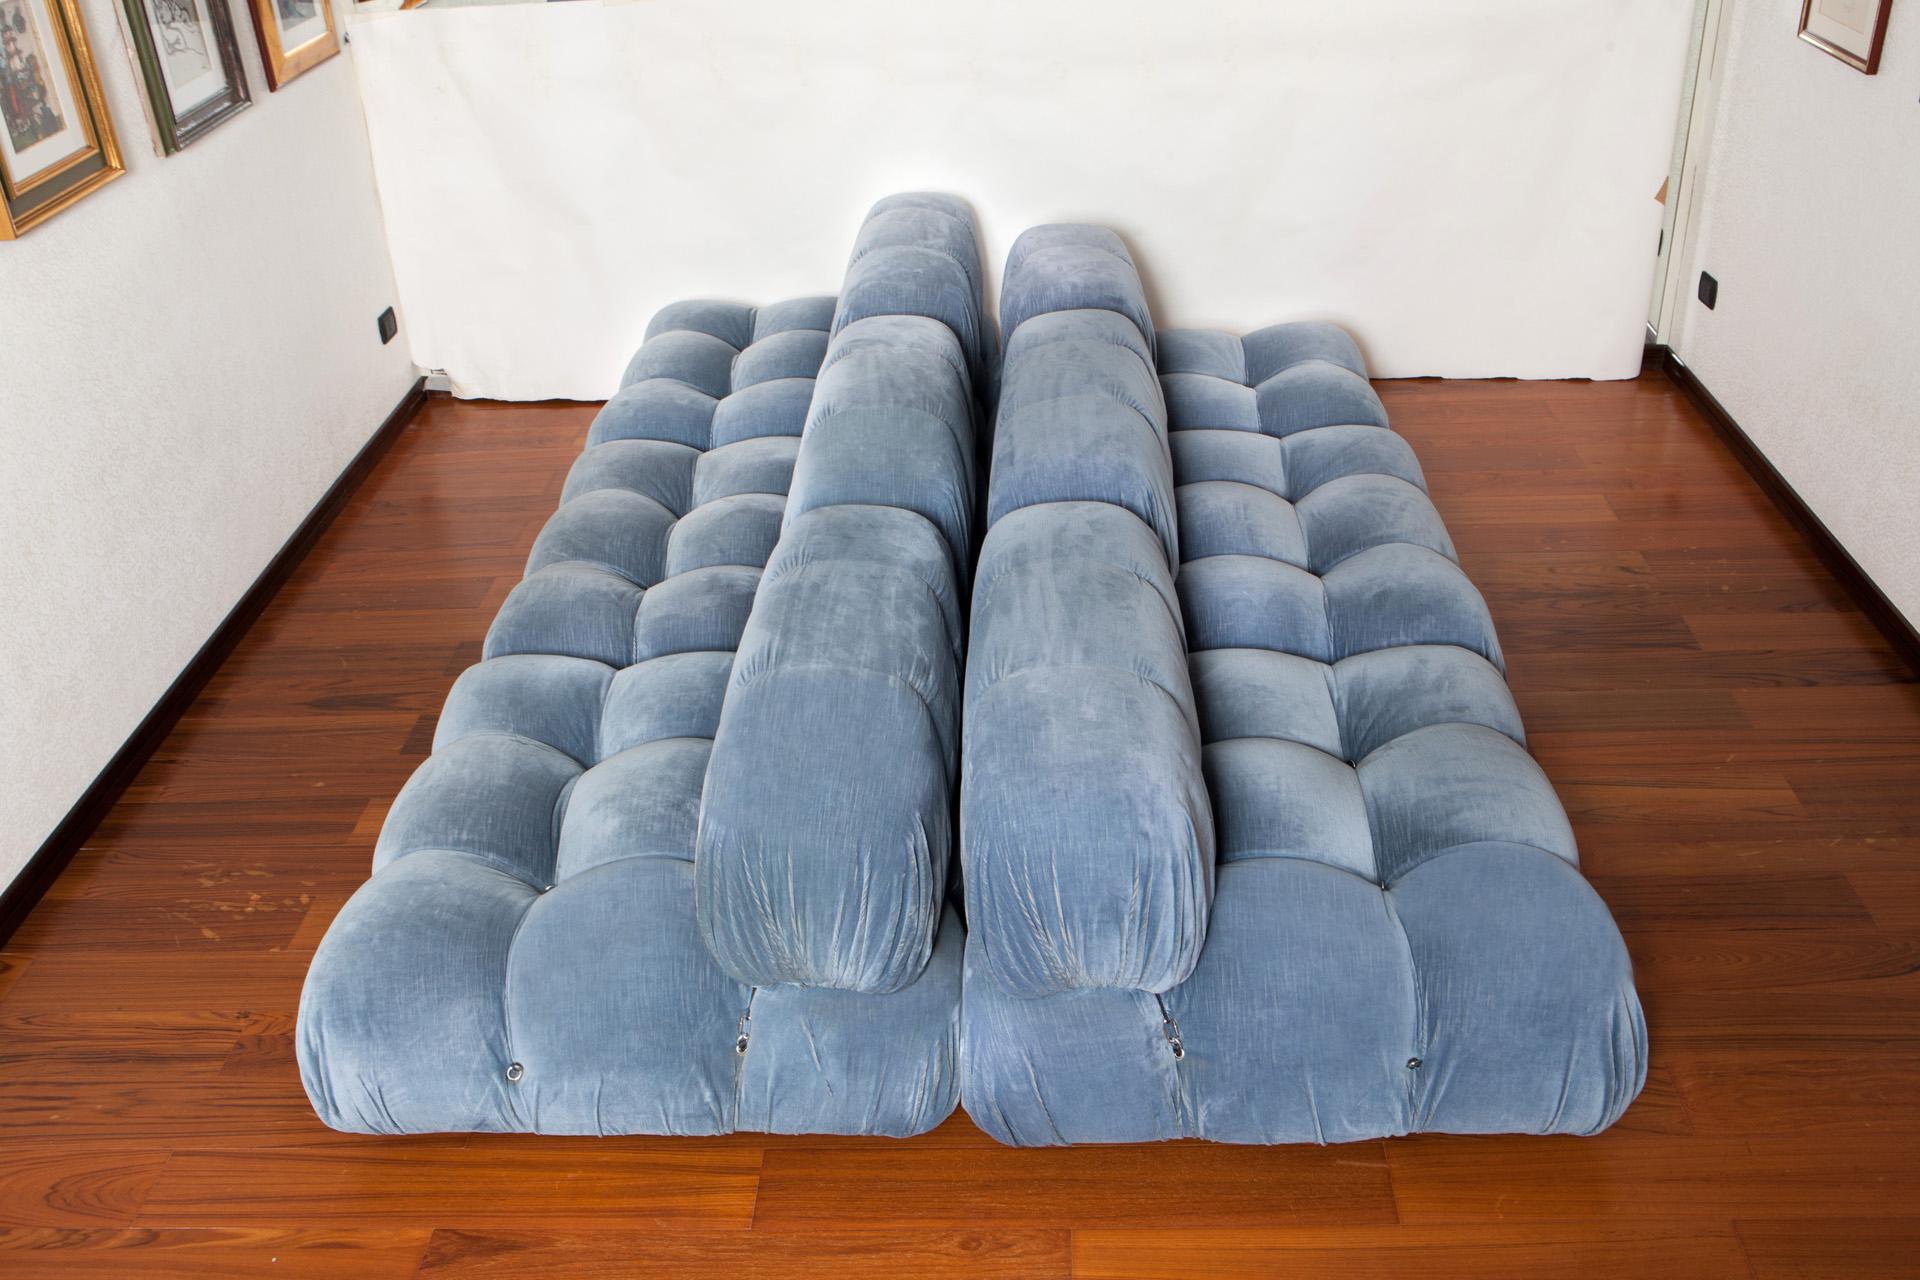 B&B Italia 6-piece Camaleonda sectional sofa by Mario Bellini in blue fabric.